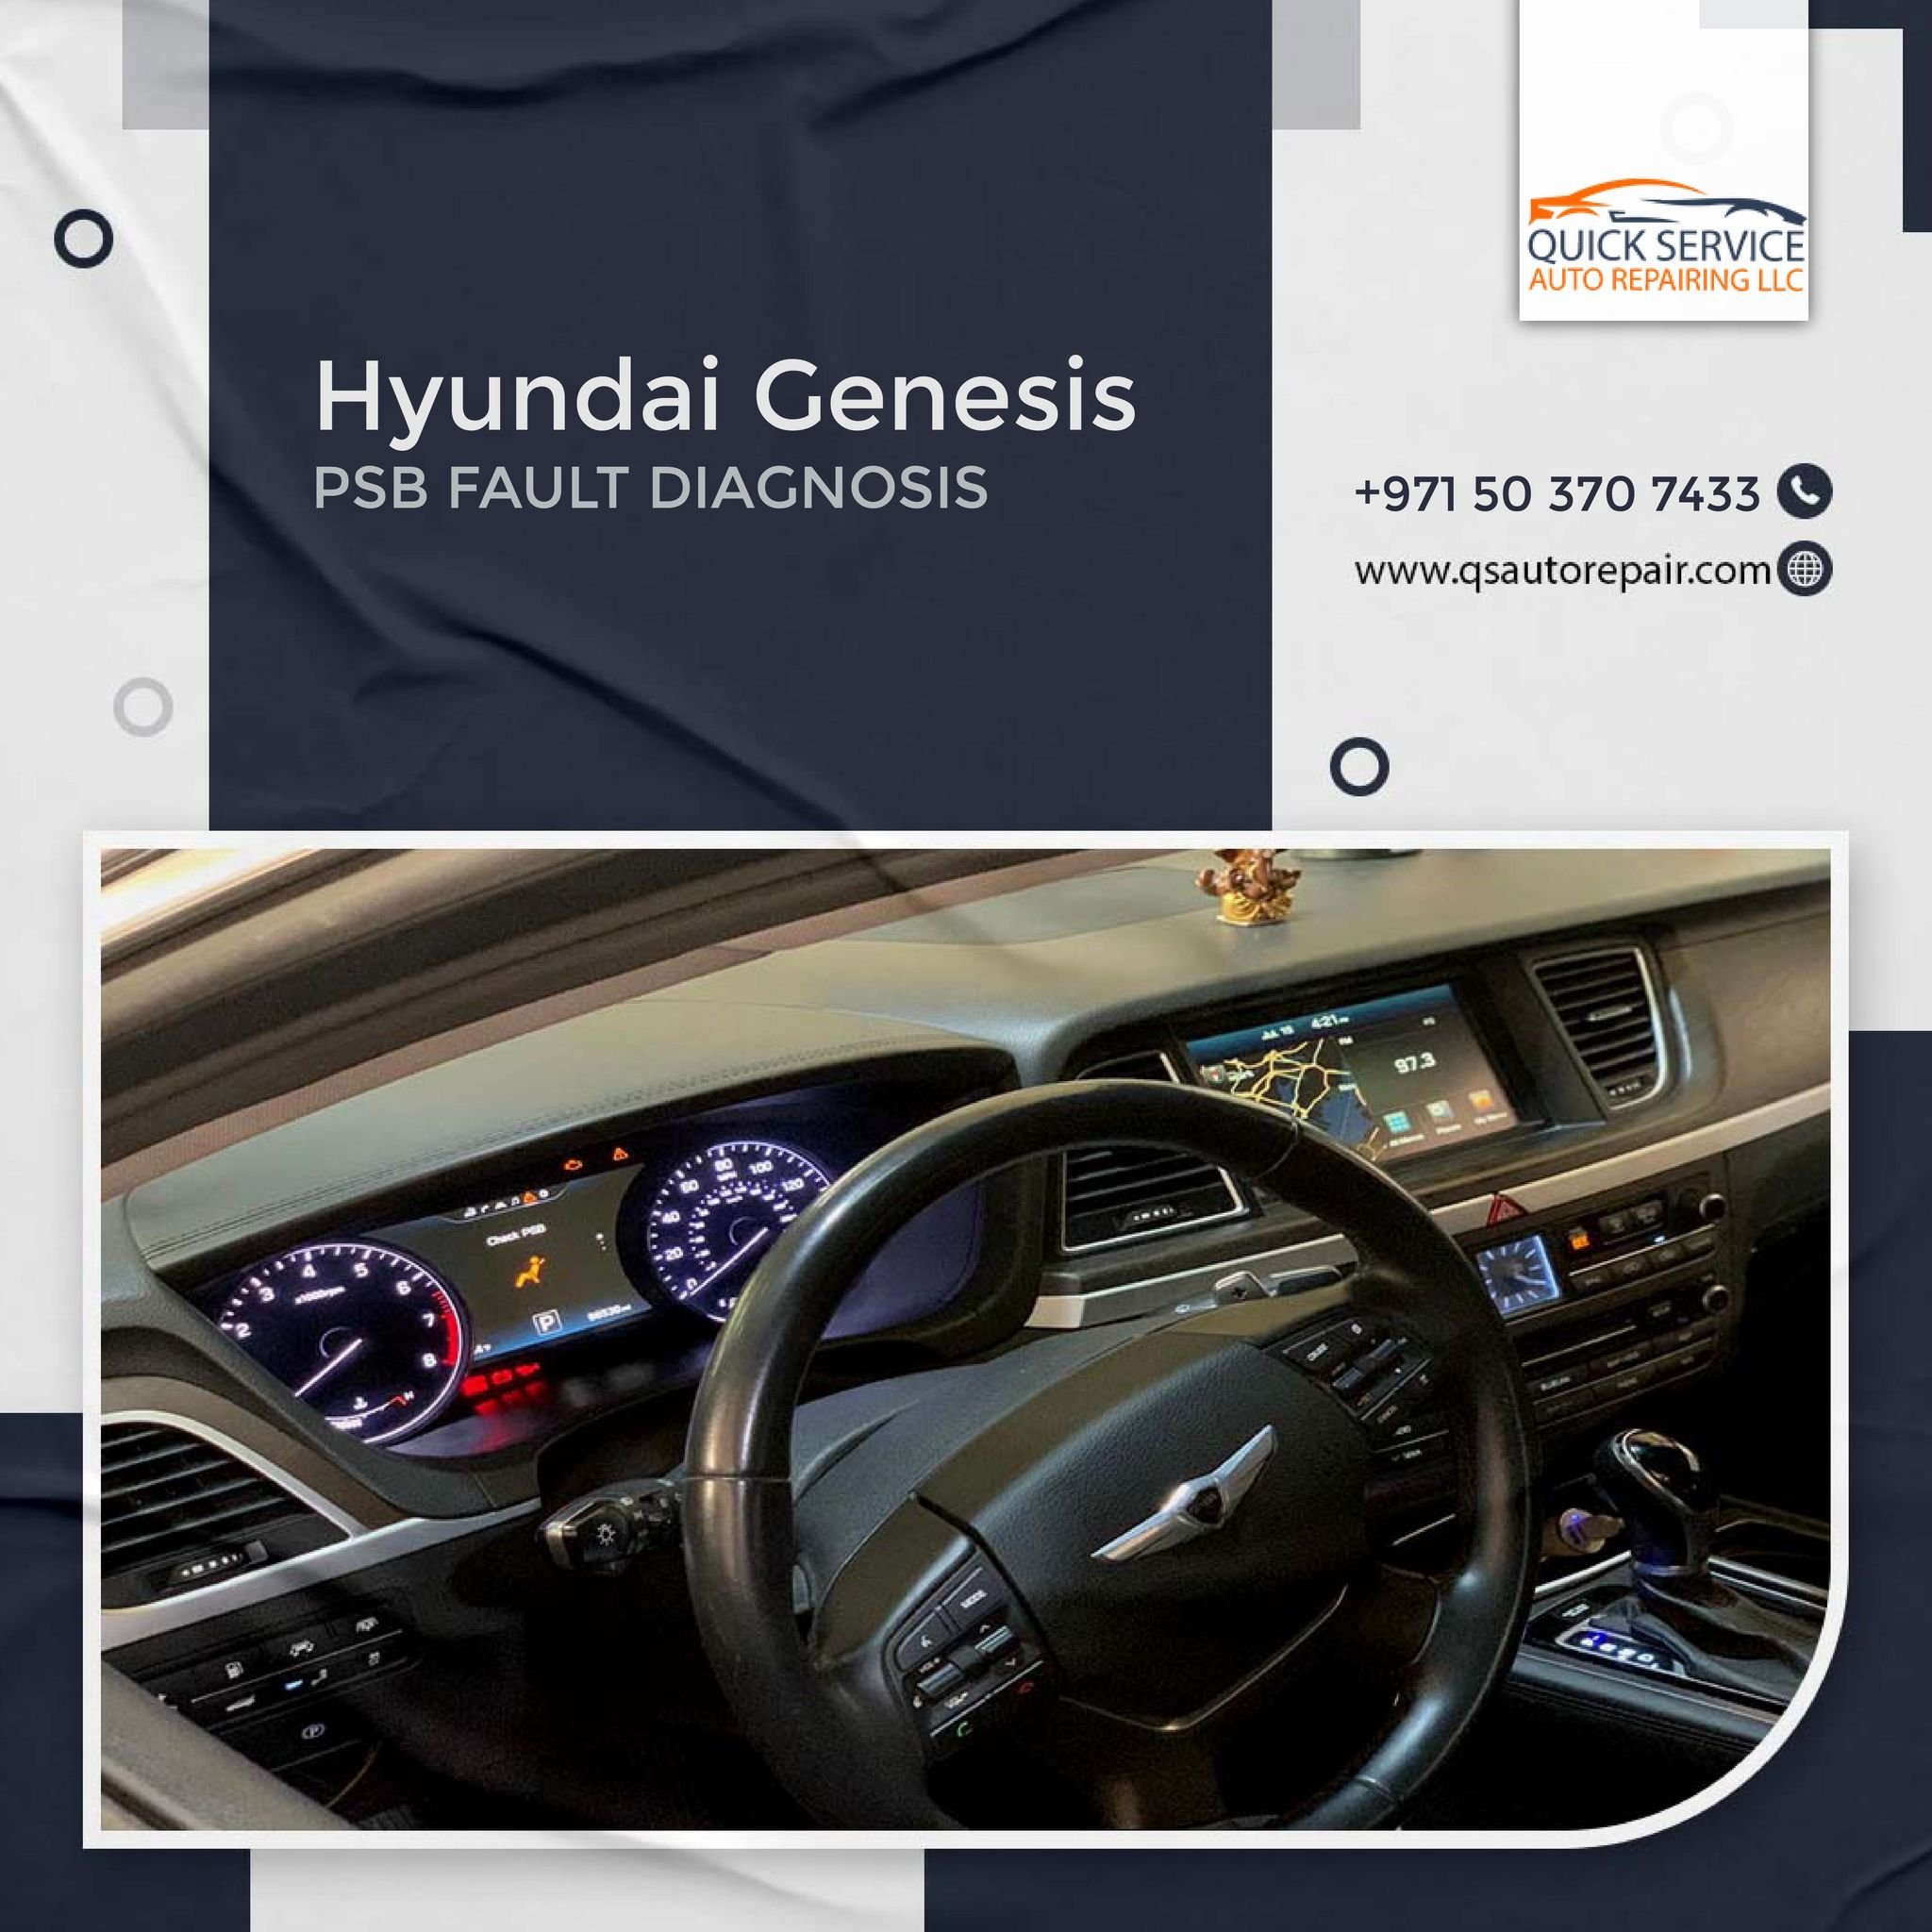 Hyundai Genesis PSB Fault Diagnosis